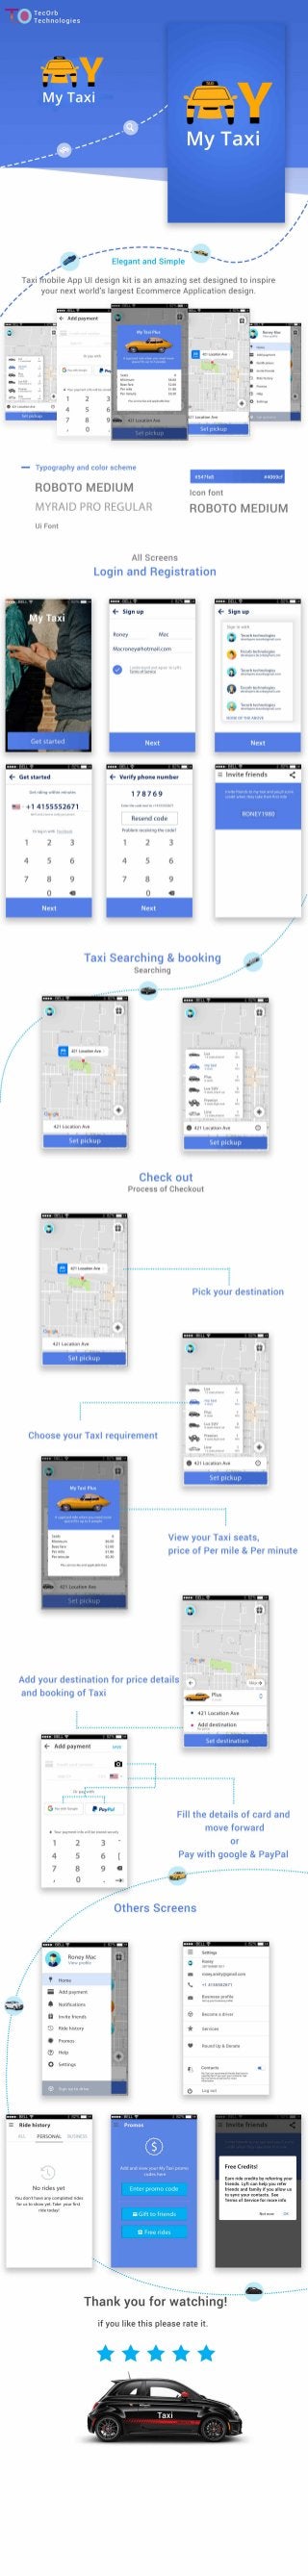 User interface design for taxi application tecorb technologies